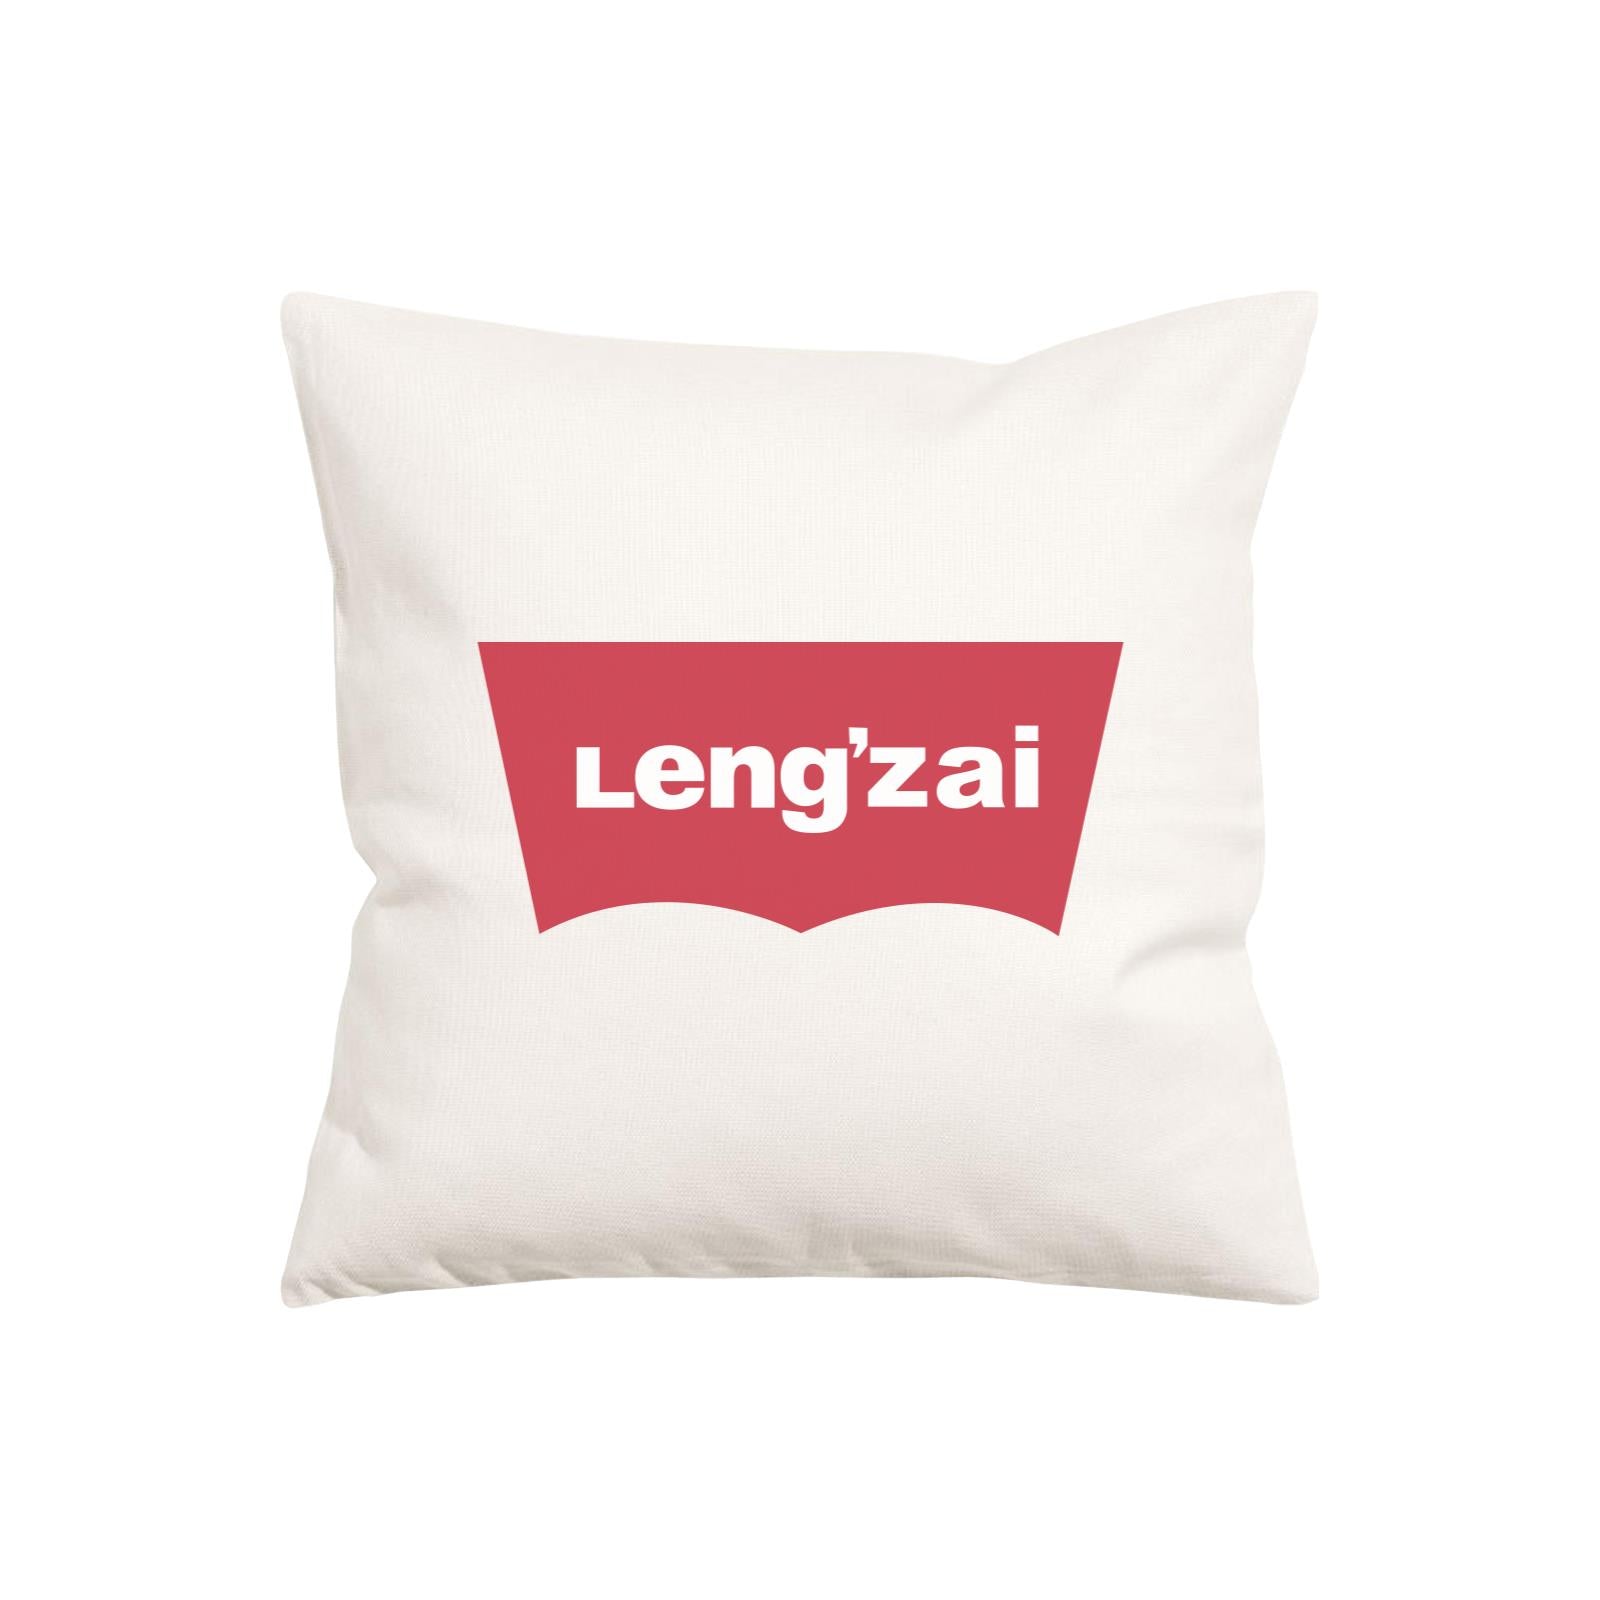 Slang Statement Lengzai Pillow Cushion